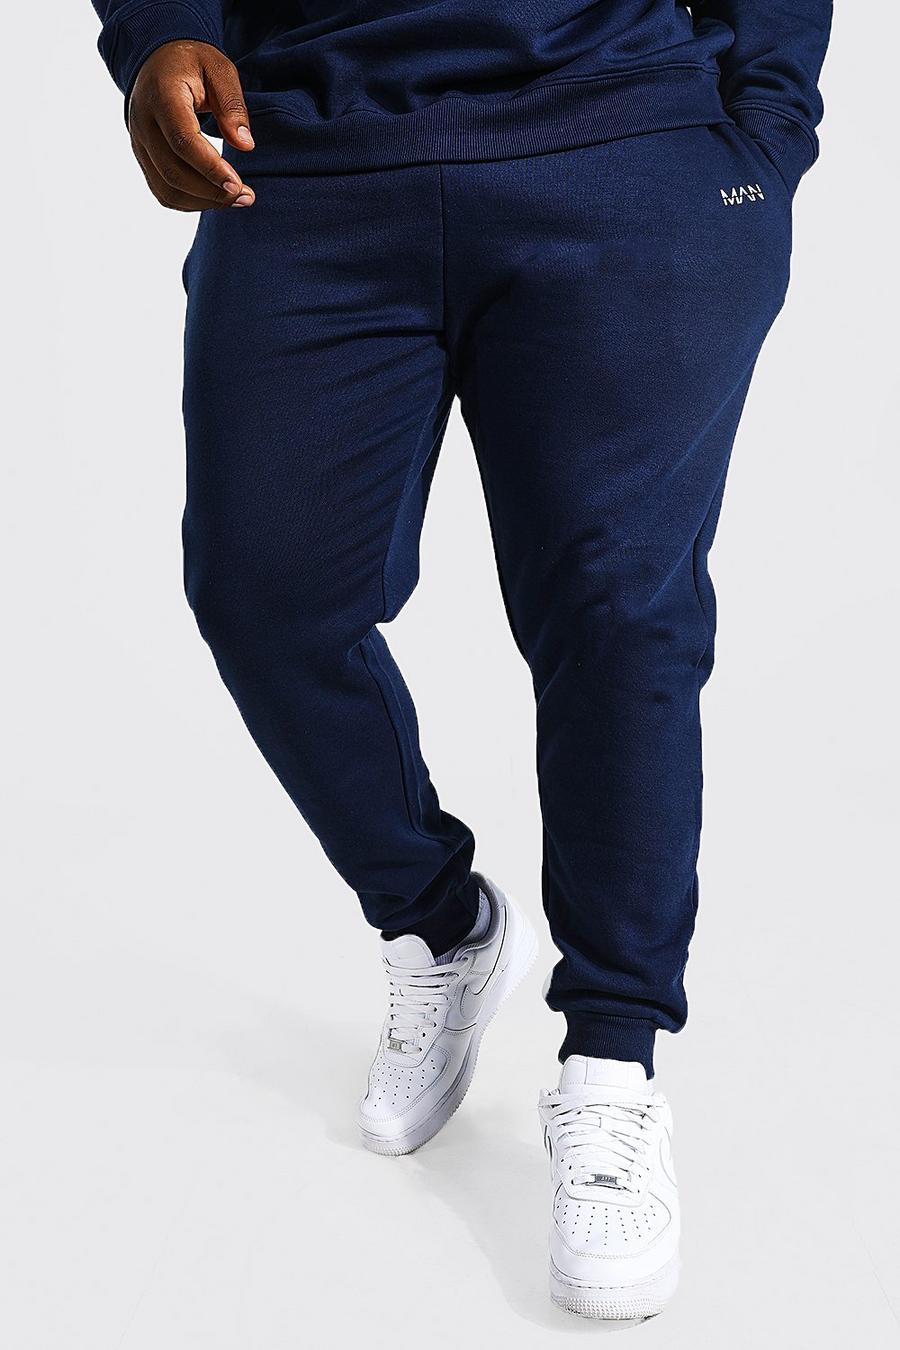 Pantaloni tuta Plus Size Man Dash Skinny Fit in fibre riciclate, Navy azul marino image number 1